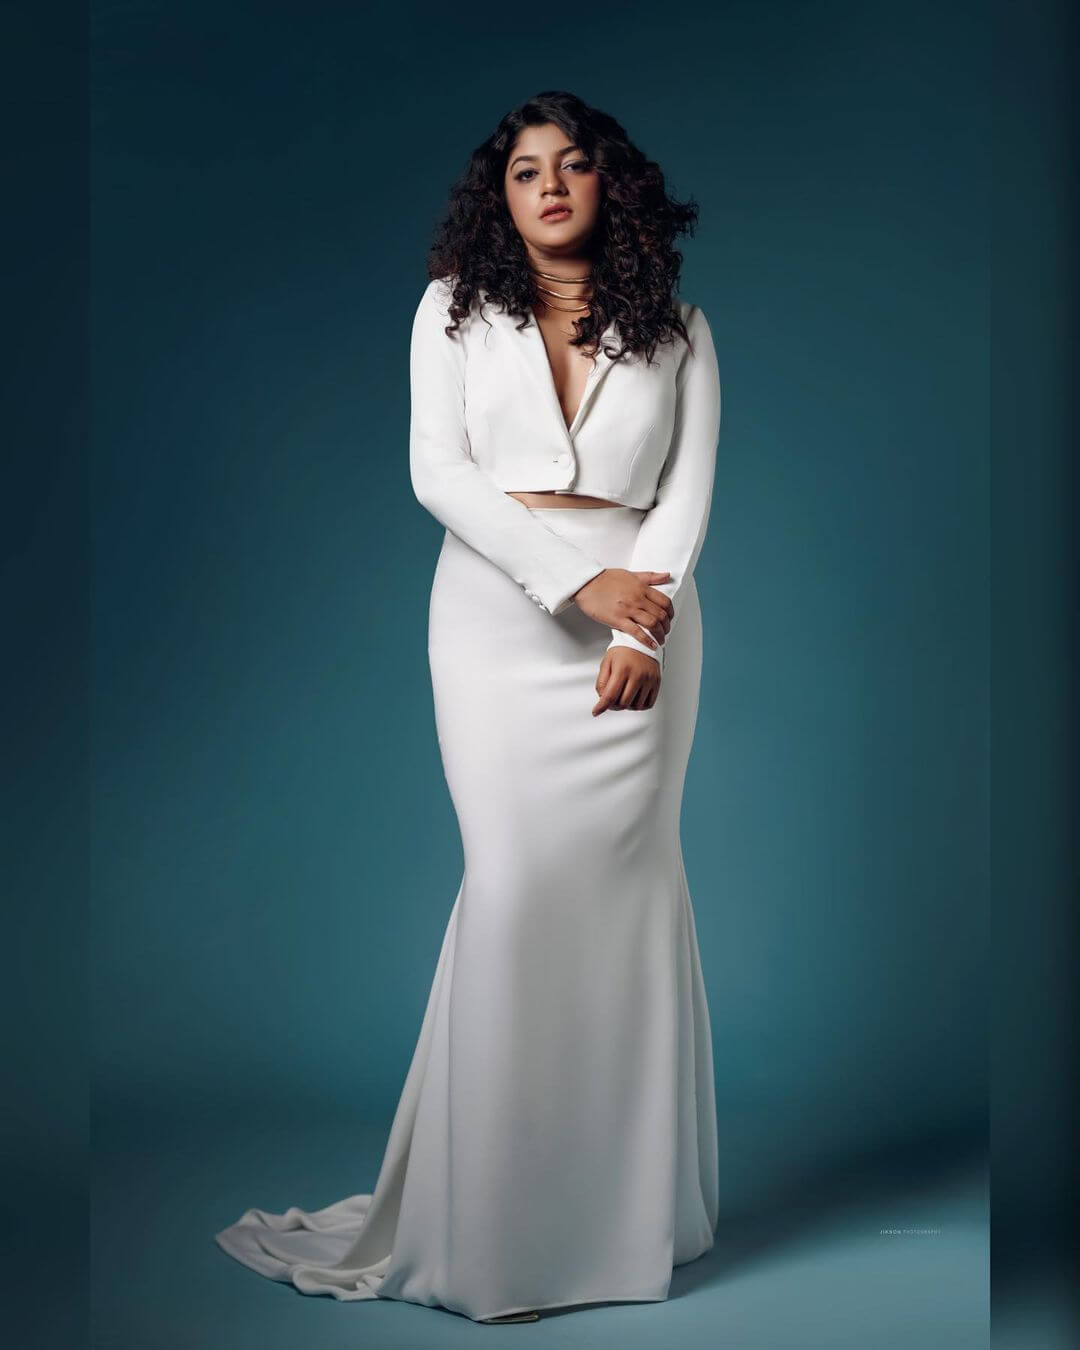 Aparna Balamurali Looks Drop Dead Gorgeous in White 2-Piece